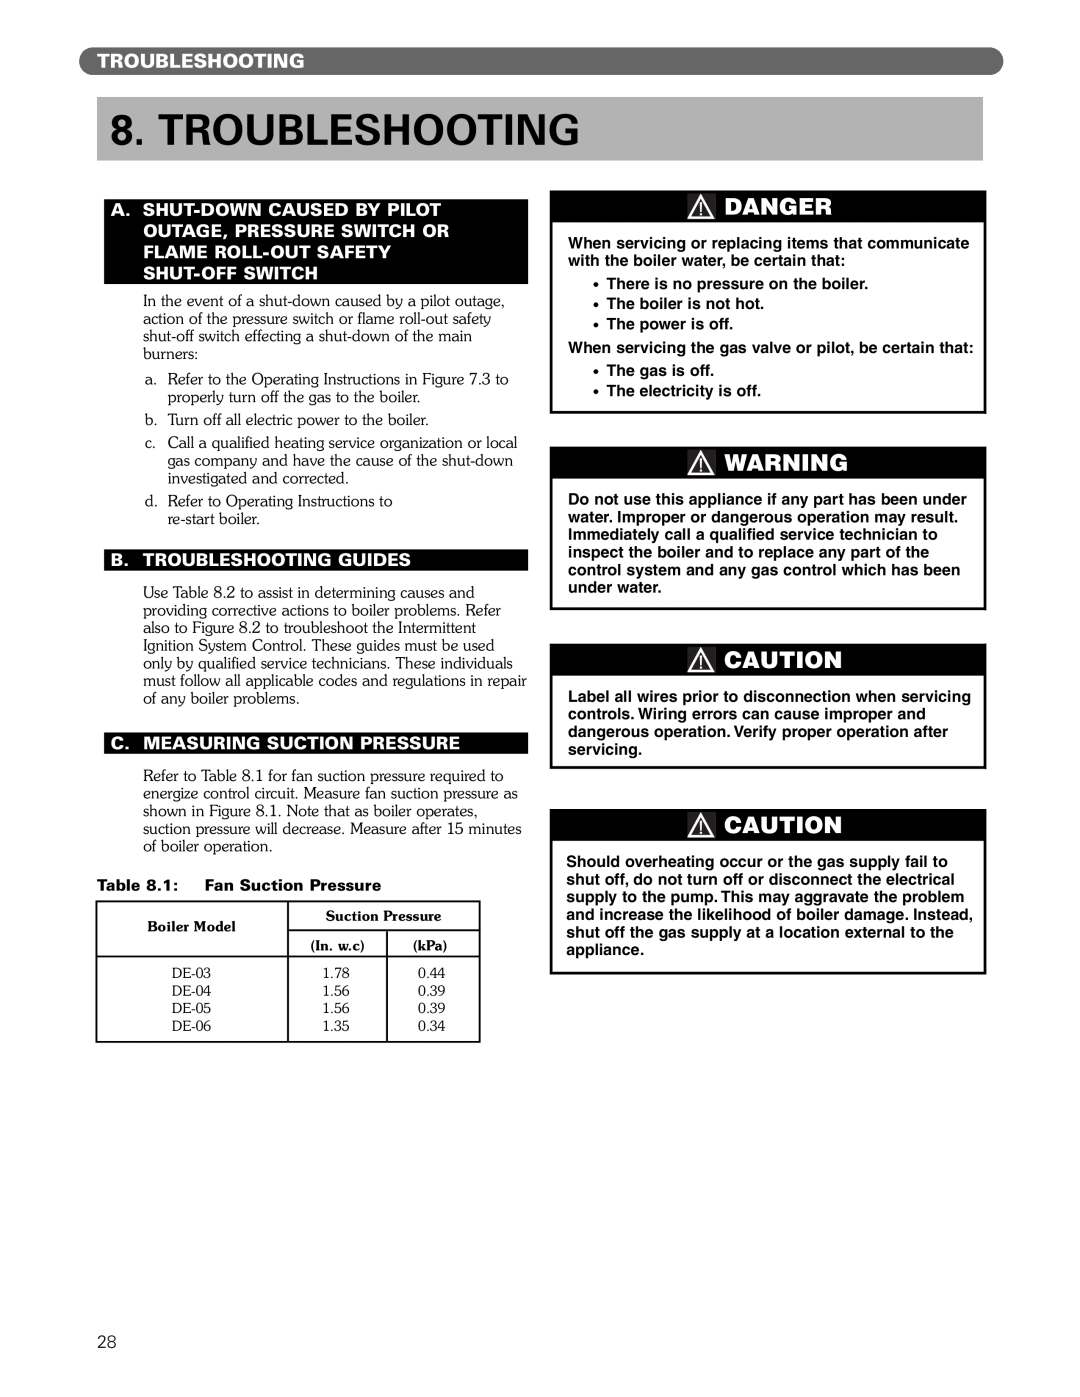 PB Heat DE manual Danger, B.Troubleshooting Guides, C.Measuring Suction Pressure 